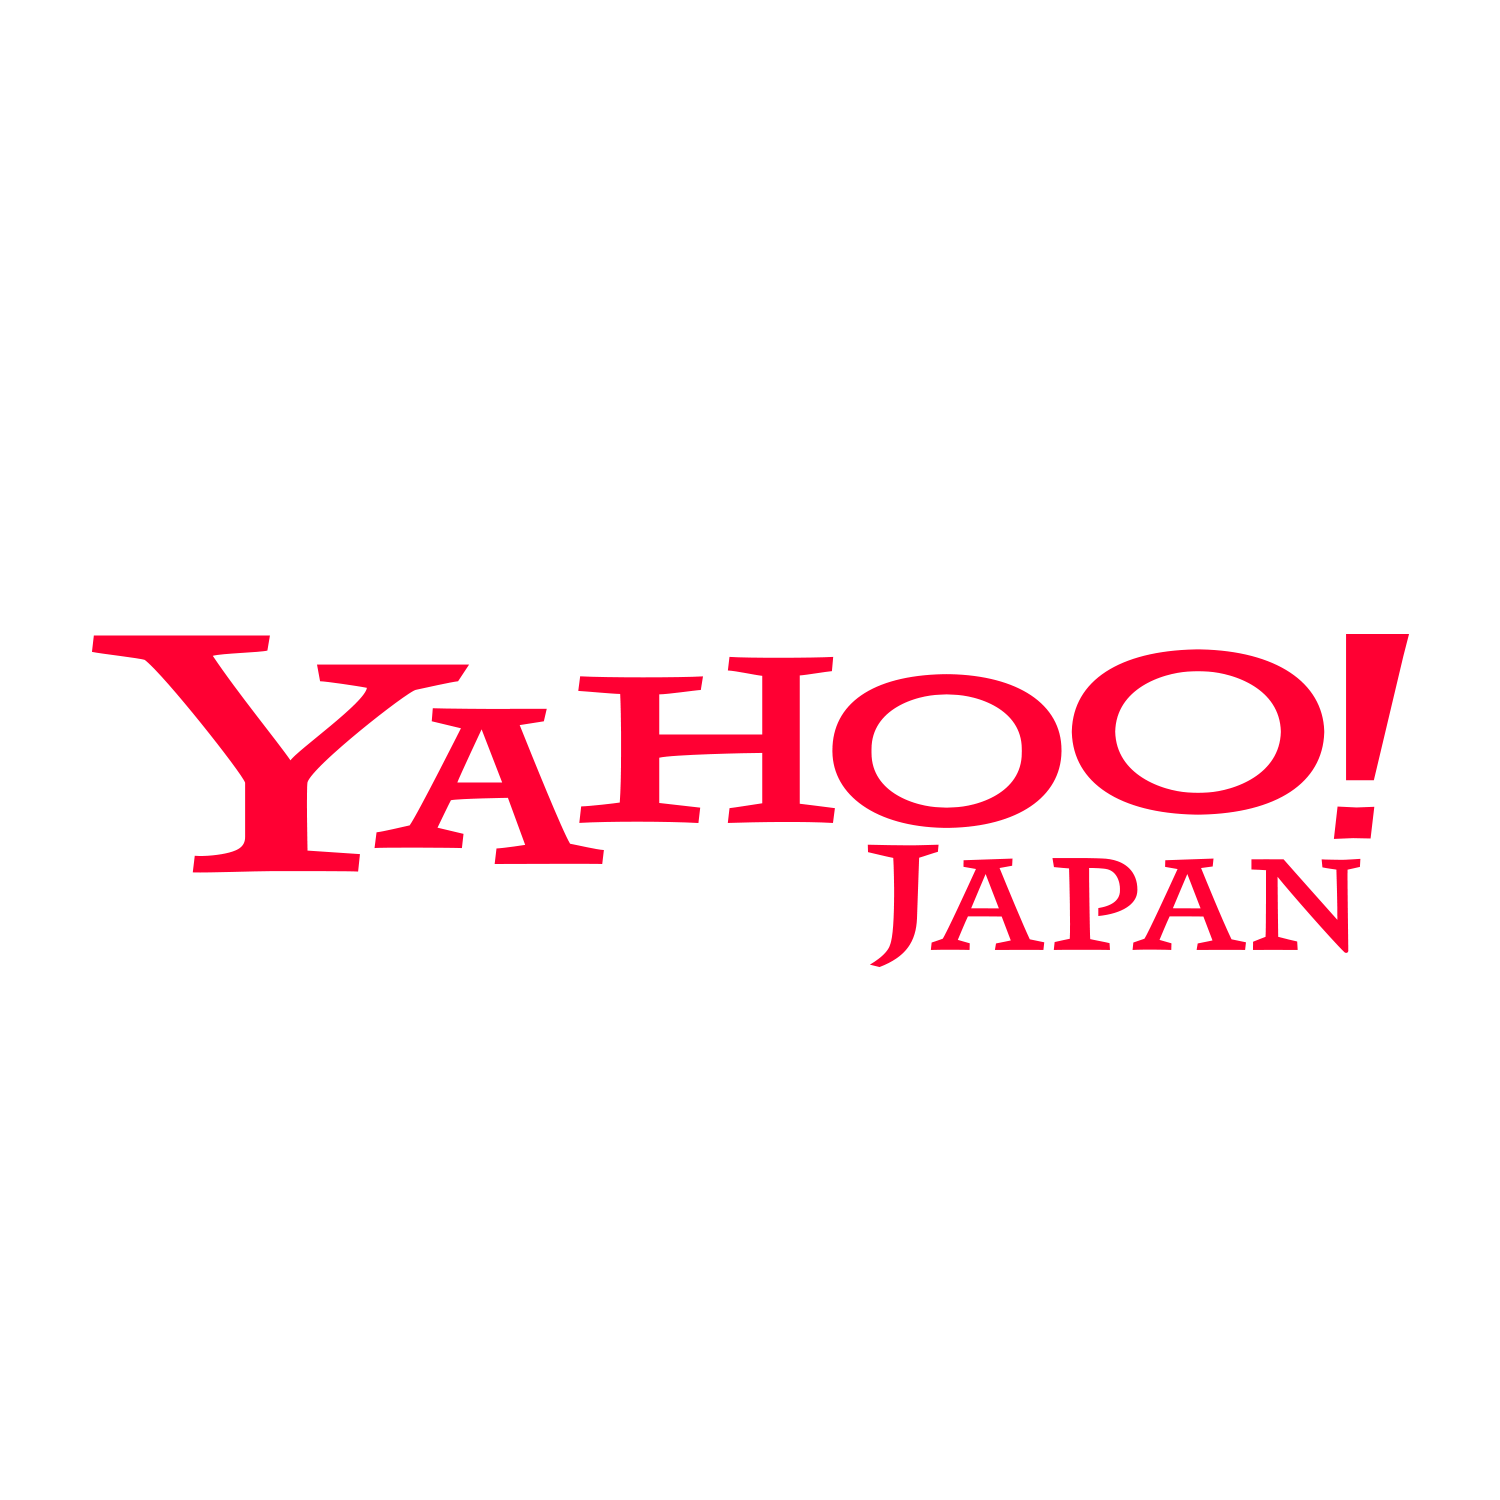 Yahoo! JAPAN Brand Kit And Logos